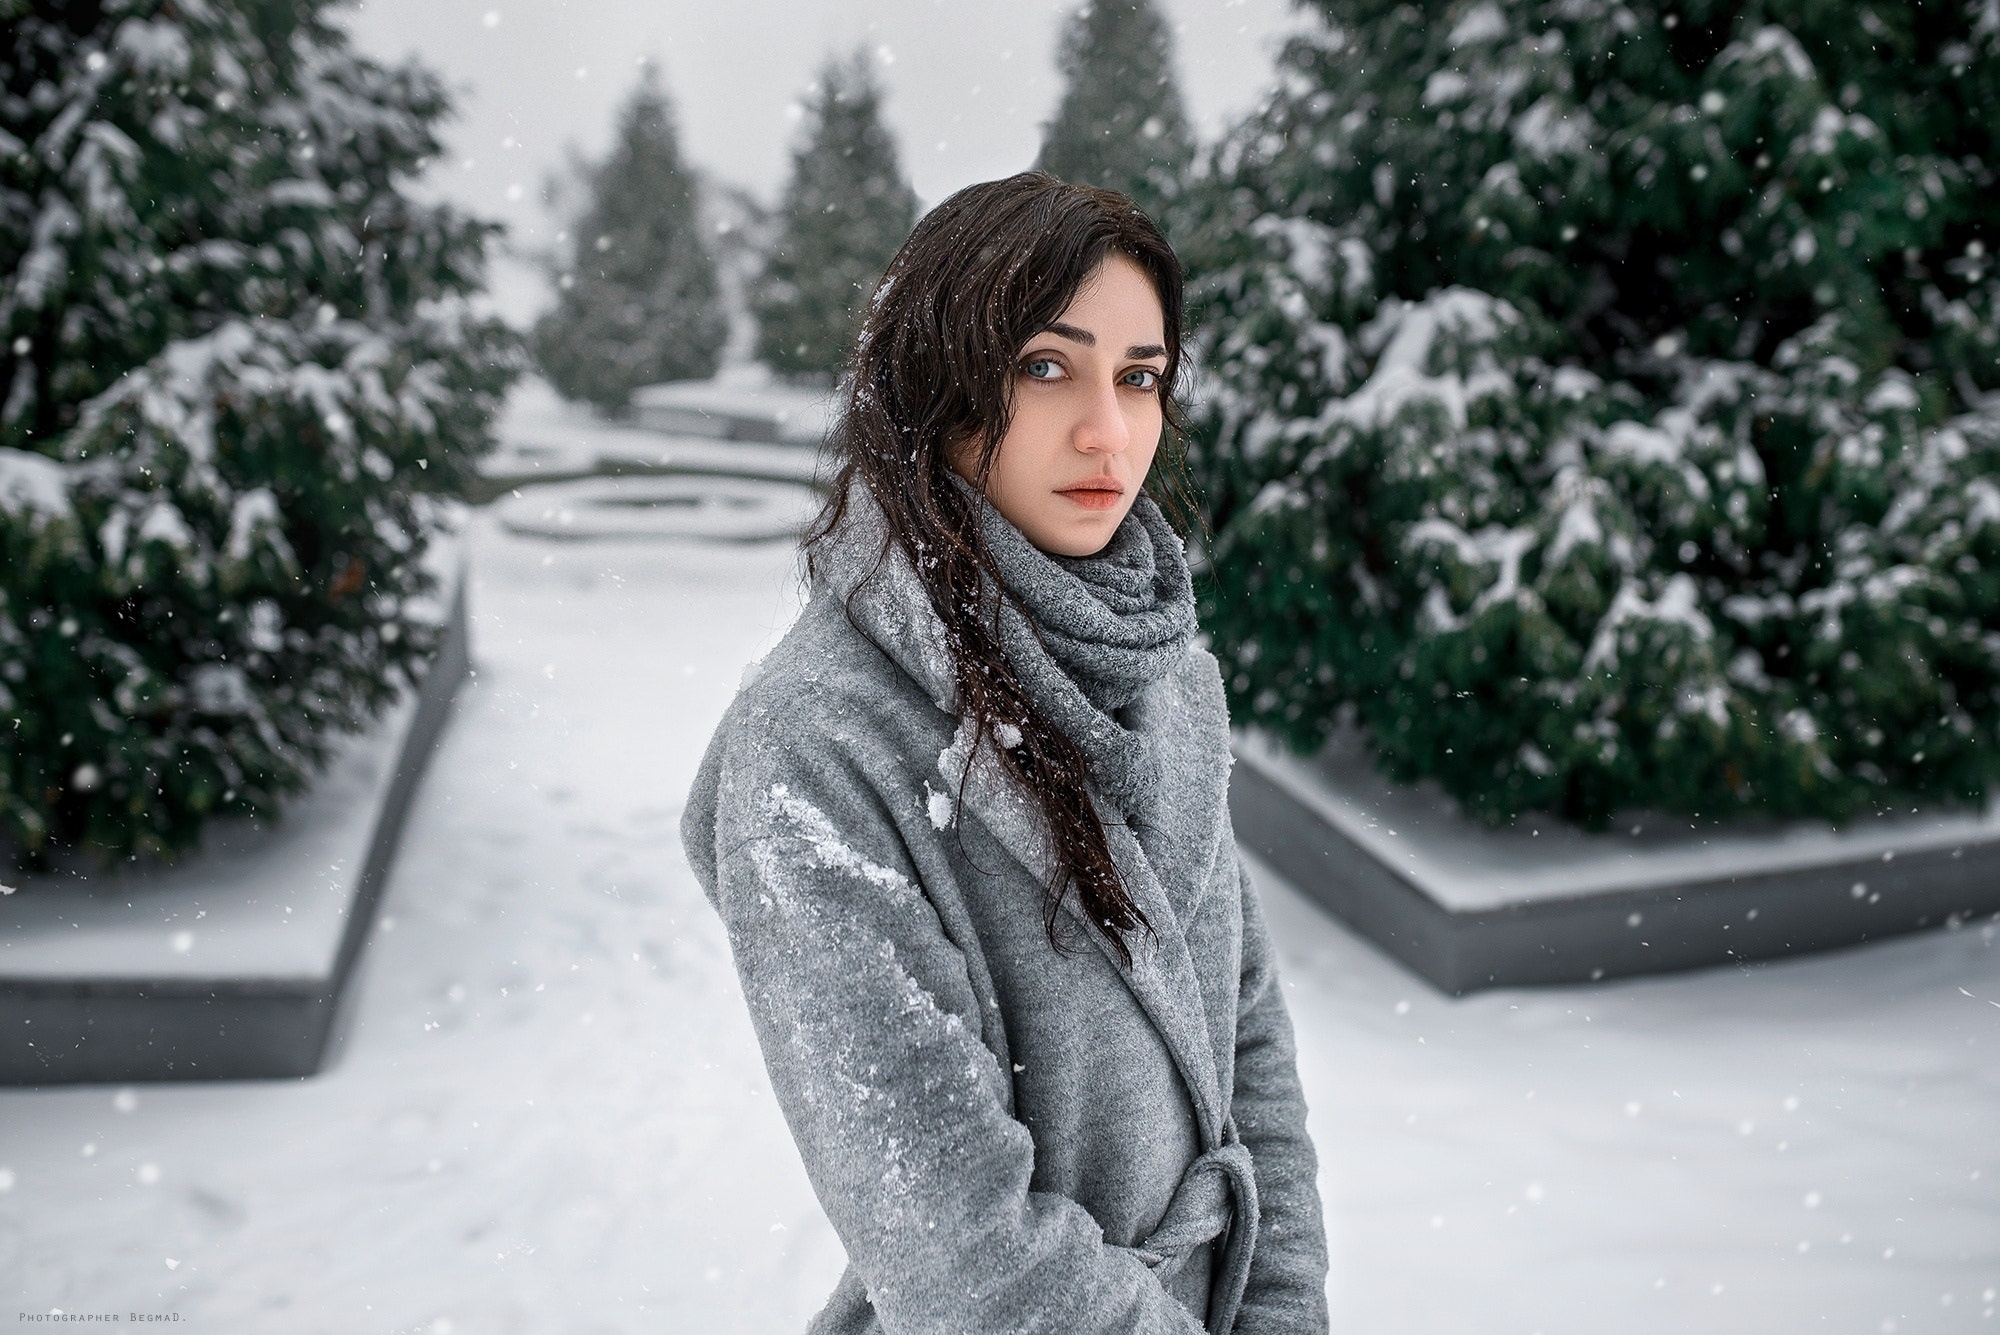 Snow is beautiful. Девушка зима. Зимний портрет. Девушка зимой. Девушка в снегу.